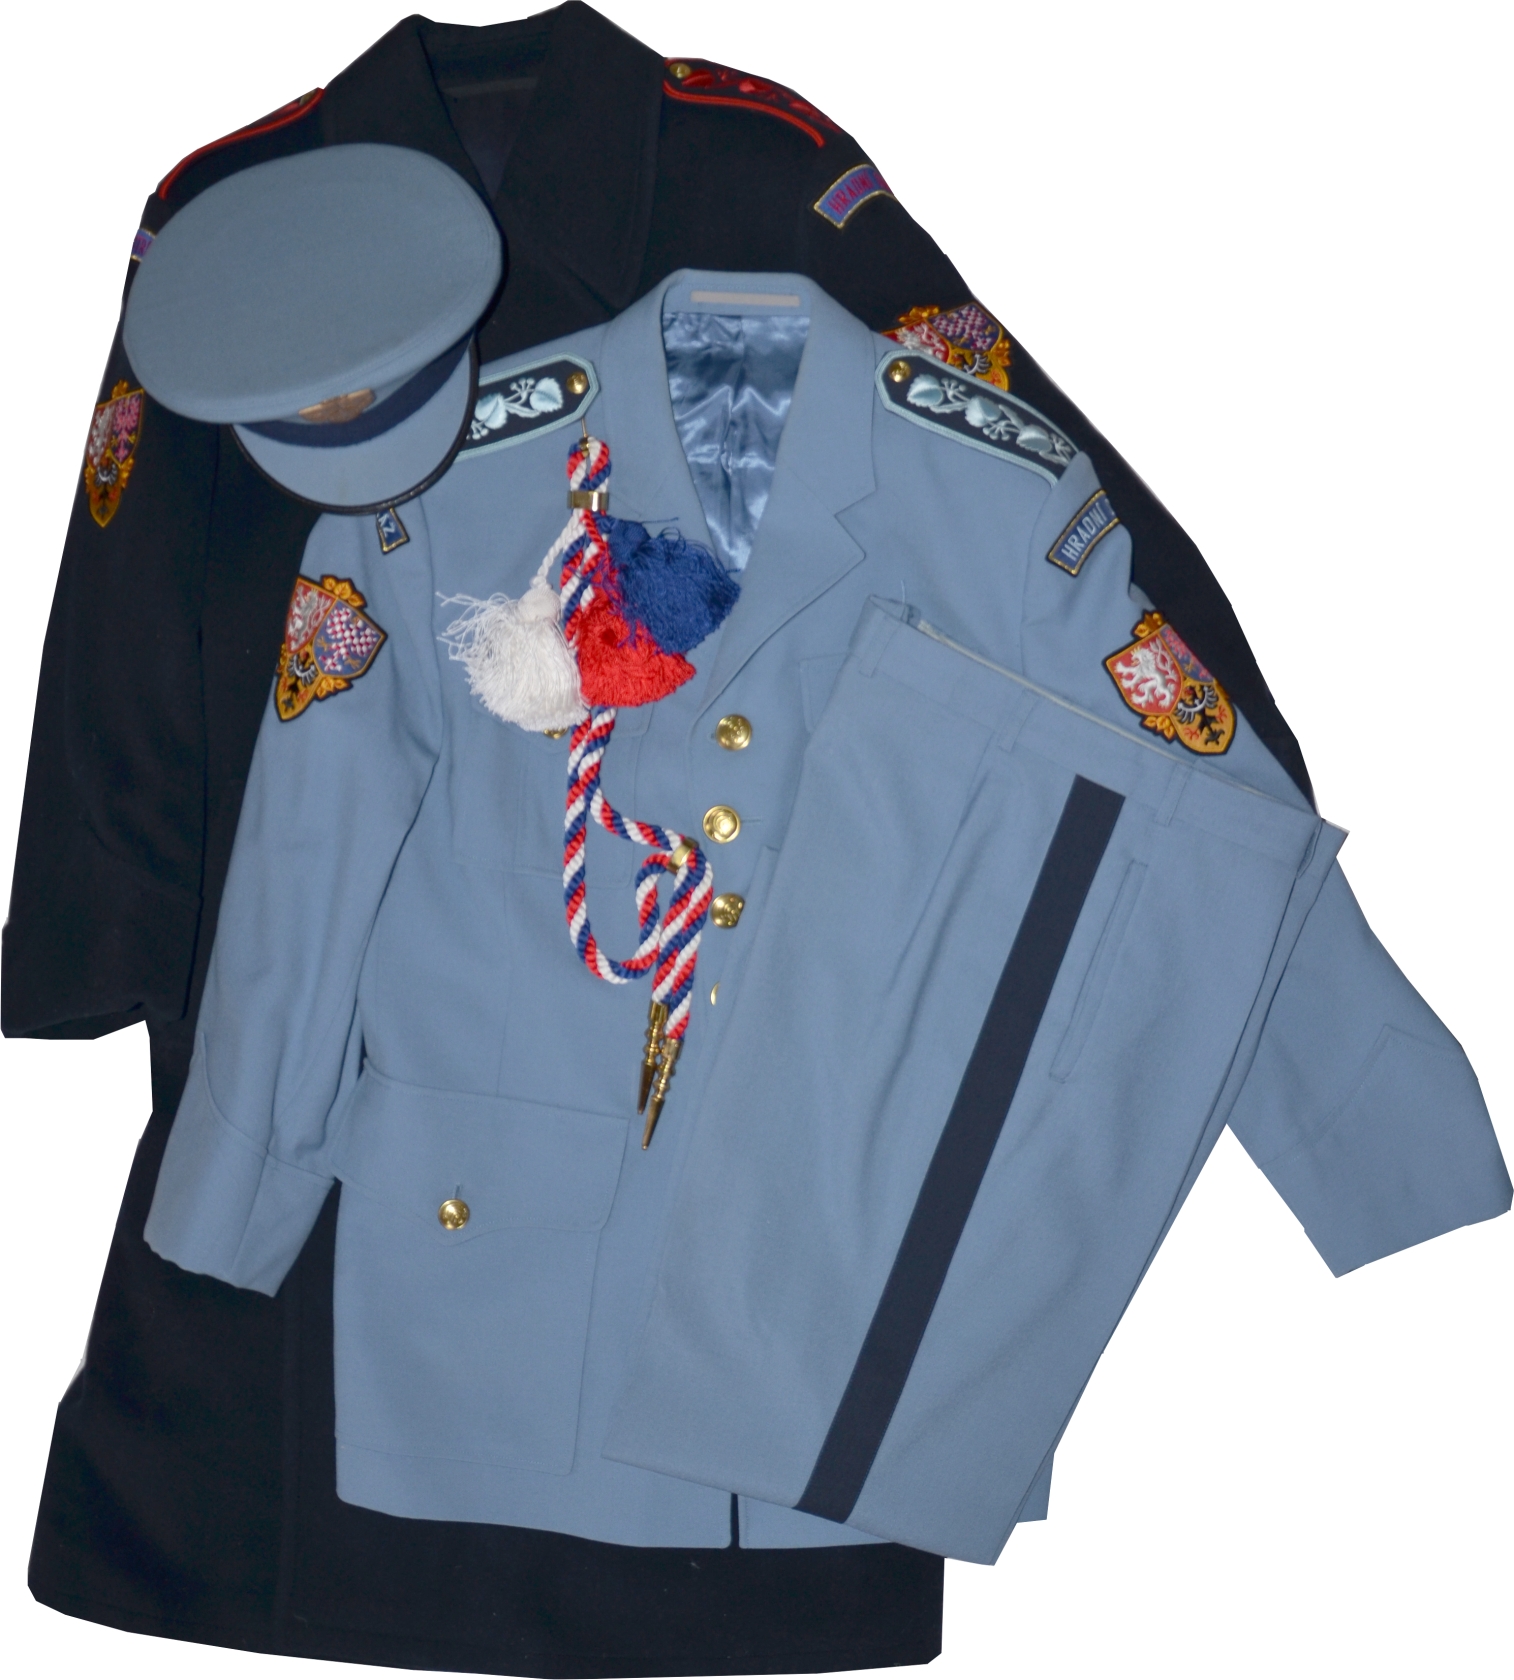 Komplet uniforma hradní stráže AČR 